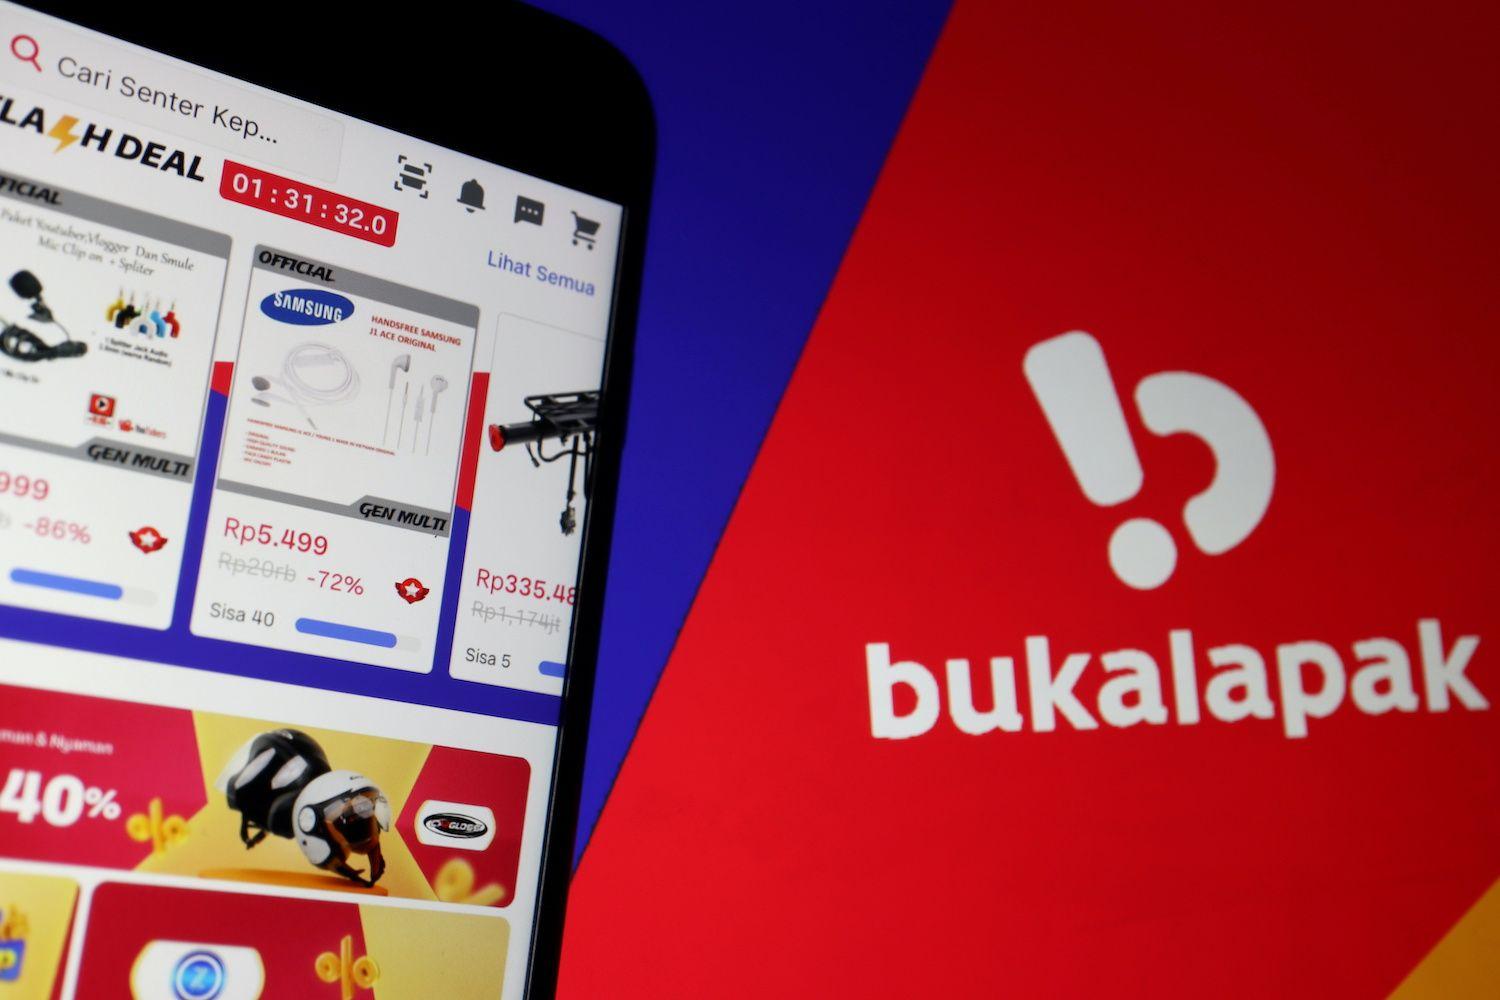 bukalapak Logo - SE Asian Tech Dealmaking Booms as